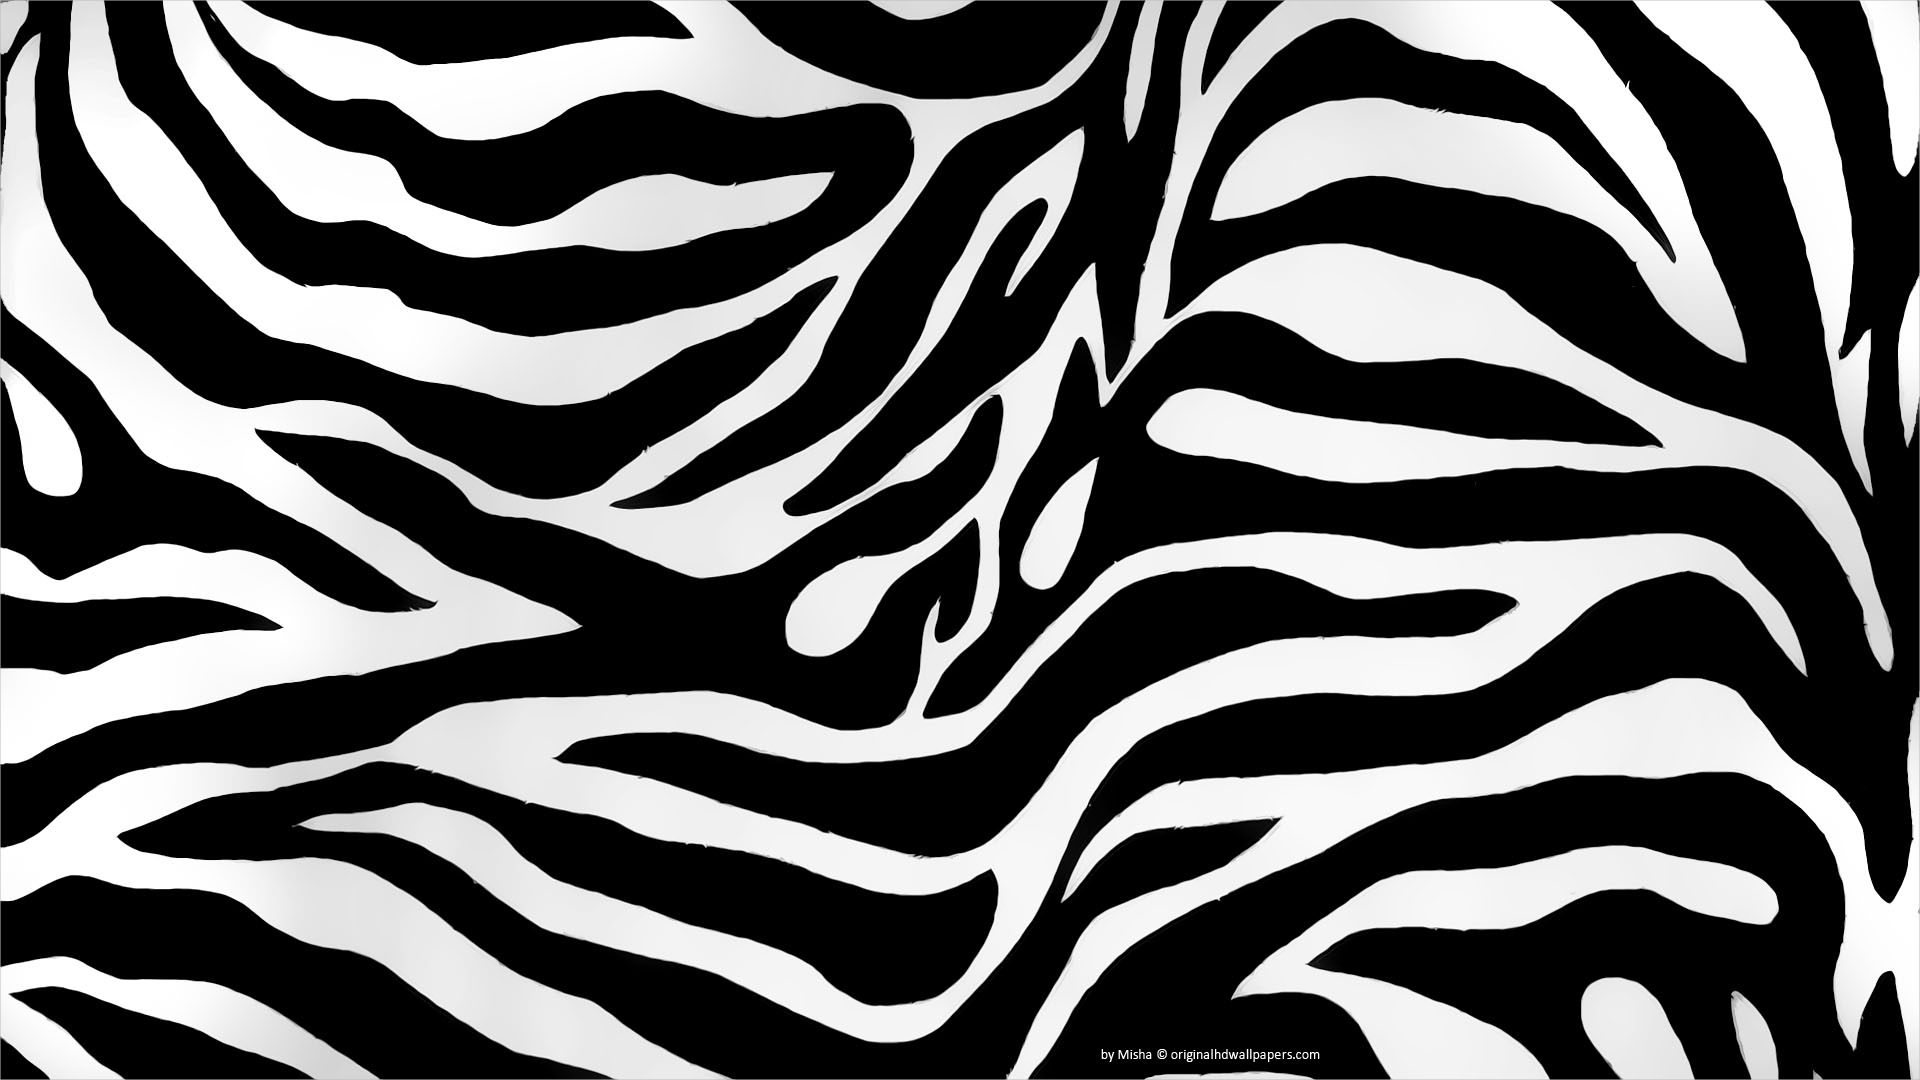 Download FREE 15+ Zebra Patterns in PAT | Vector EPS